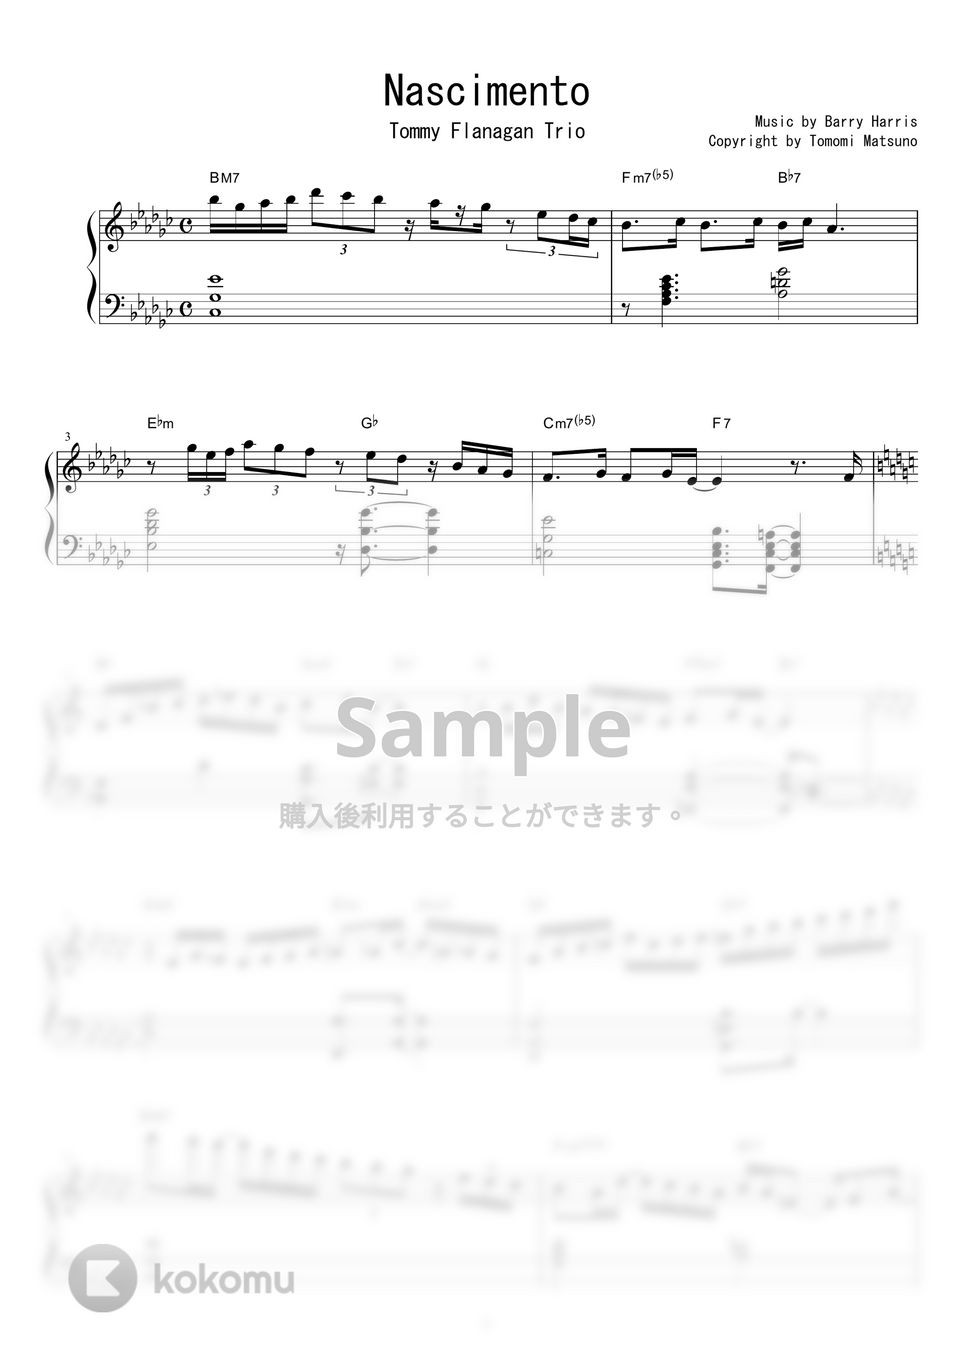 Tommy Flanagan - Nascimento by piano*score